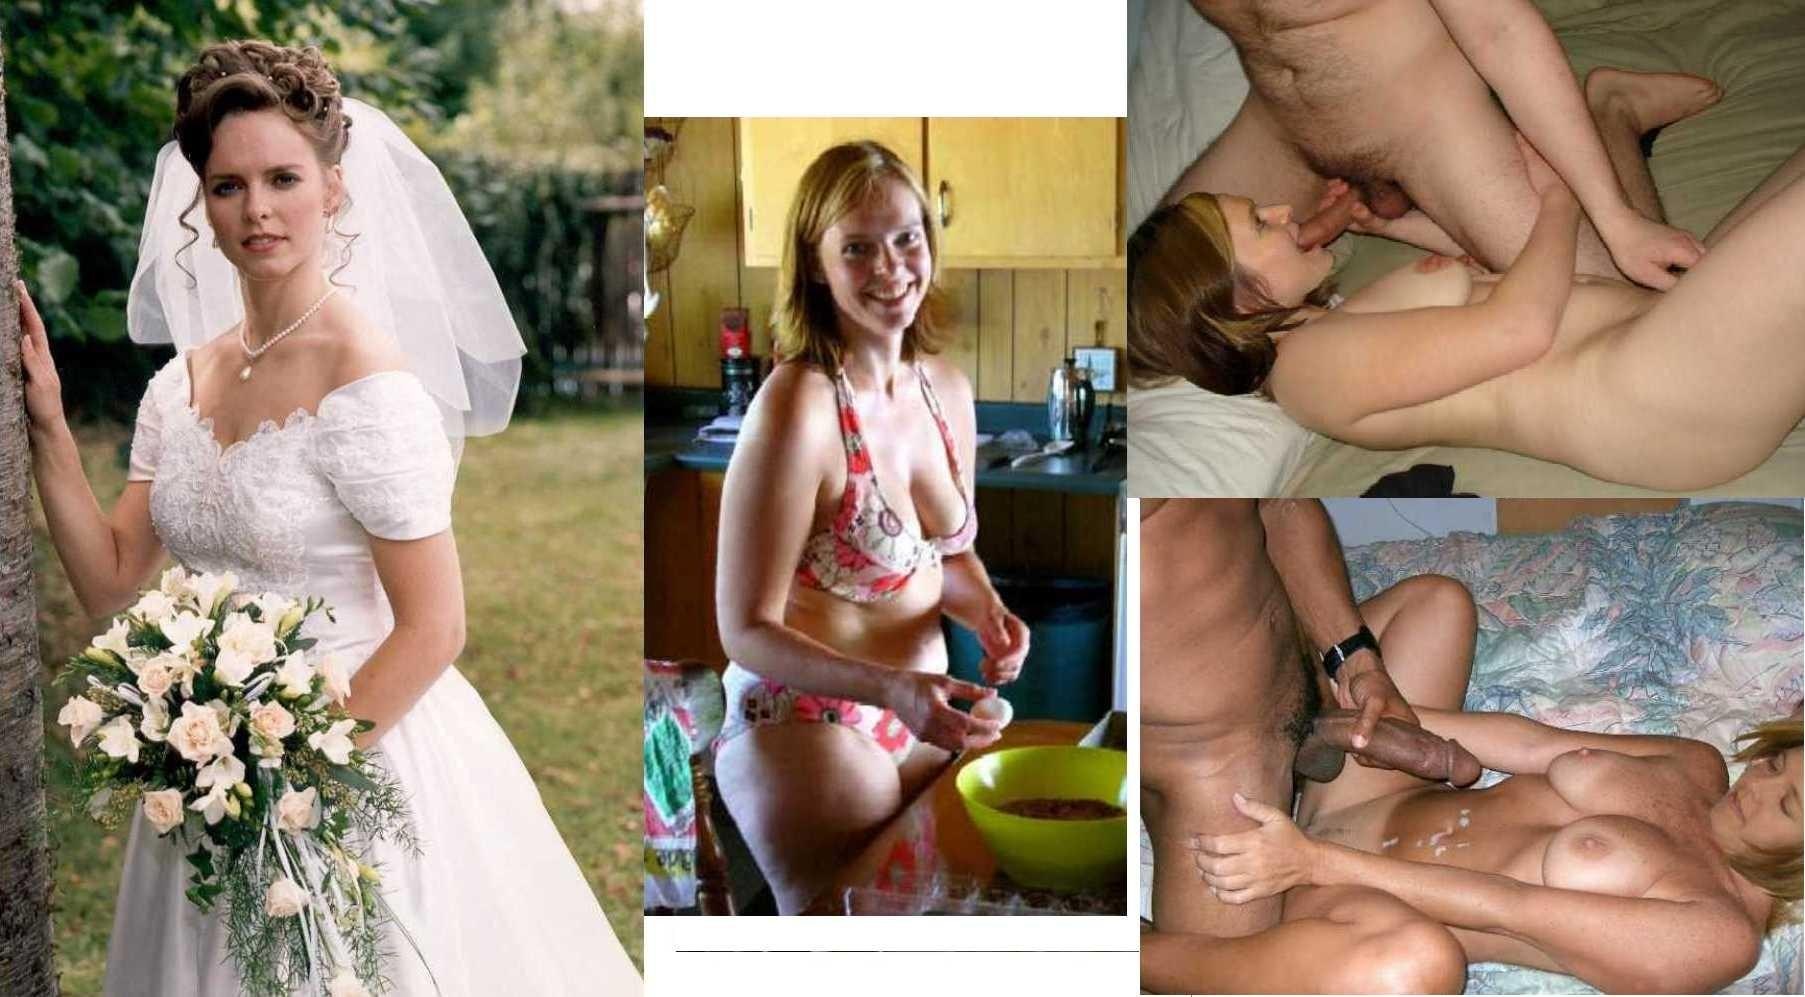 albertus pienaar recommends naked married women pic